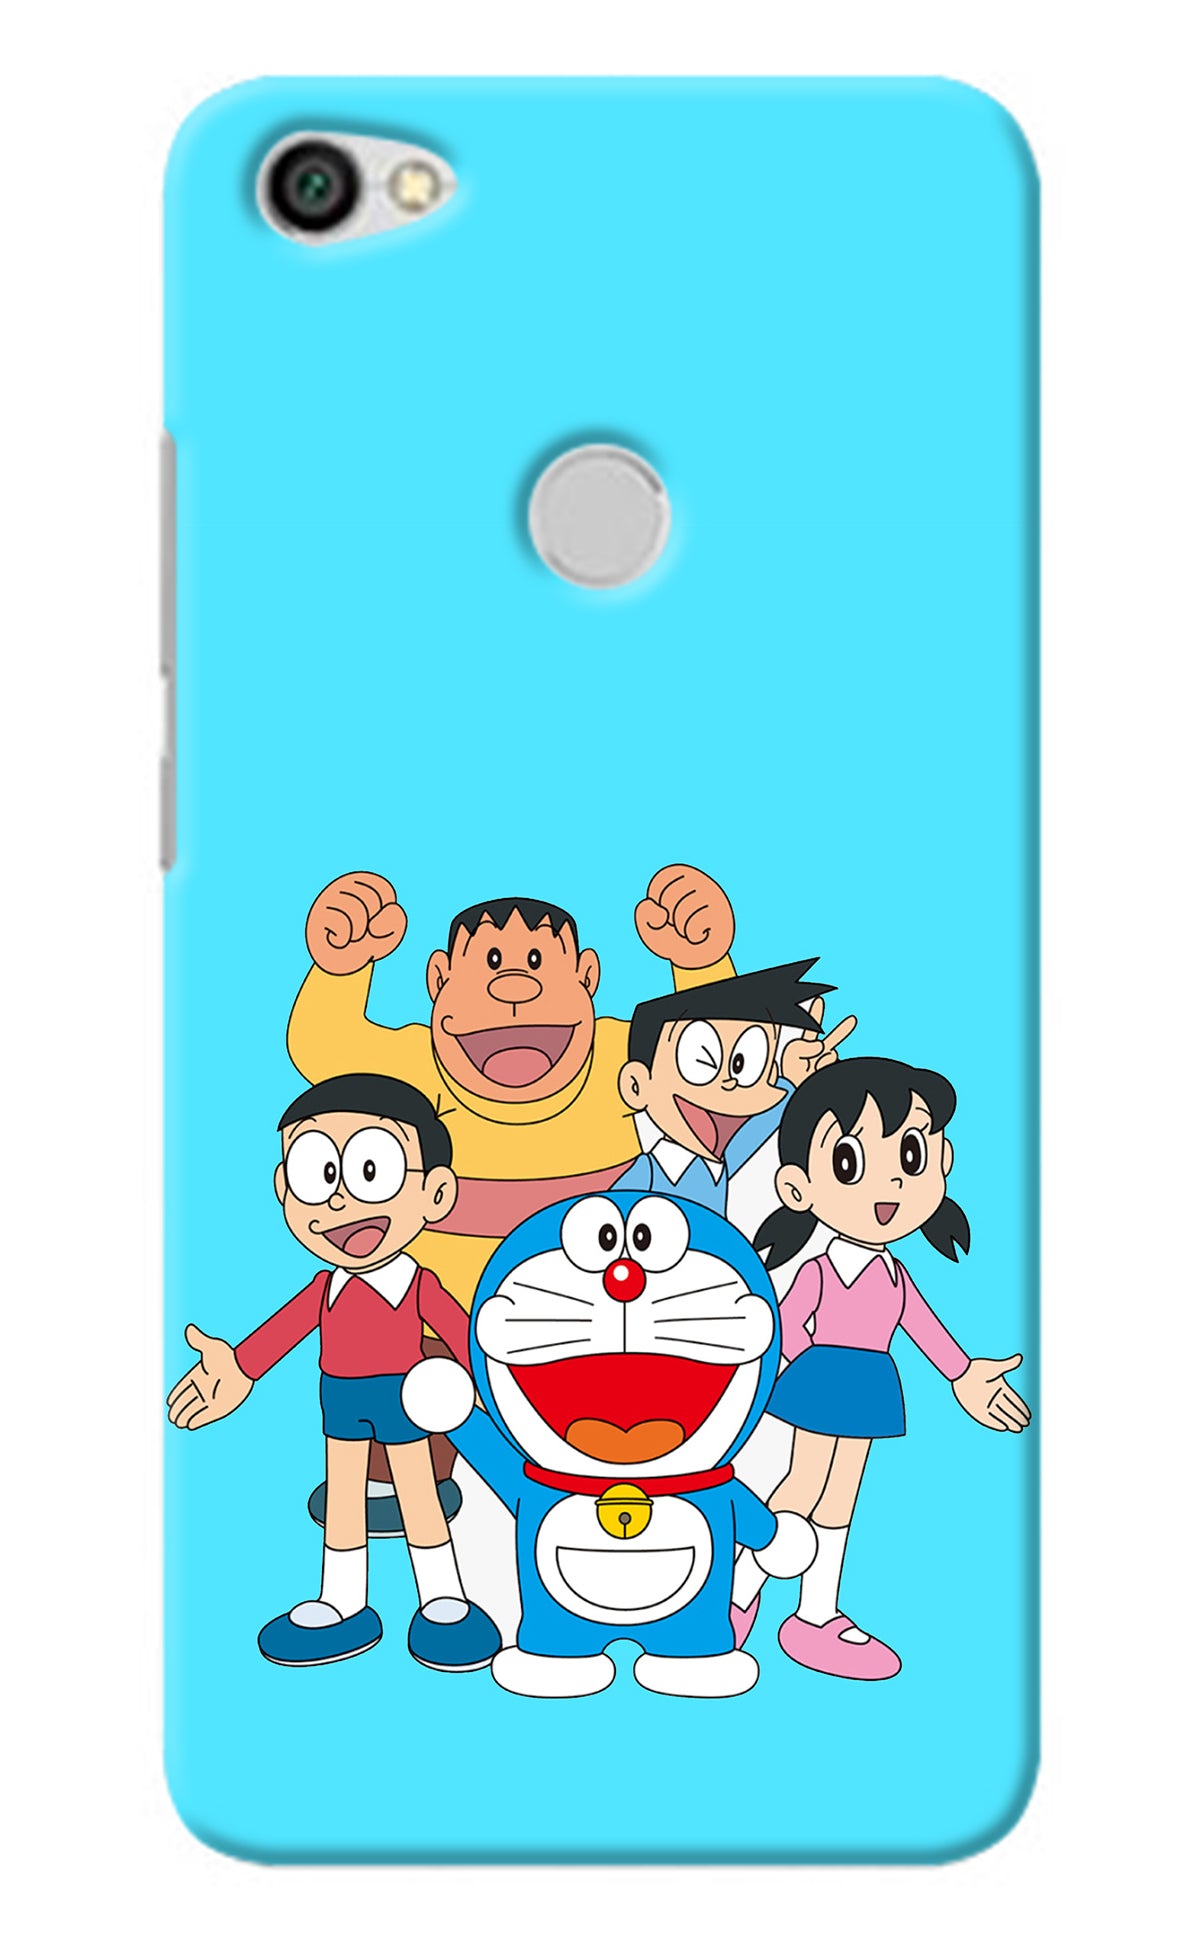 Doraemon Gang Redmi Y1 Back Cover